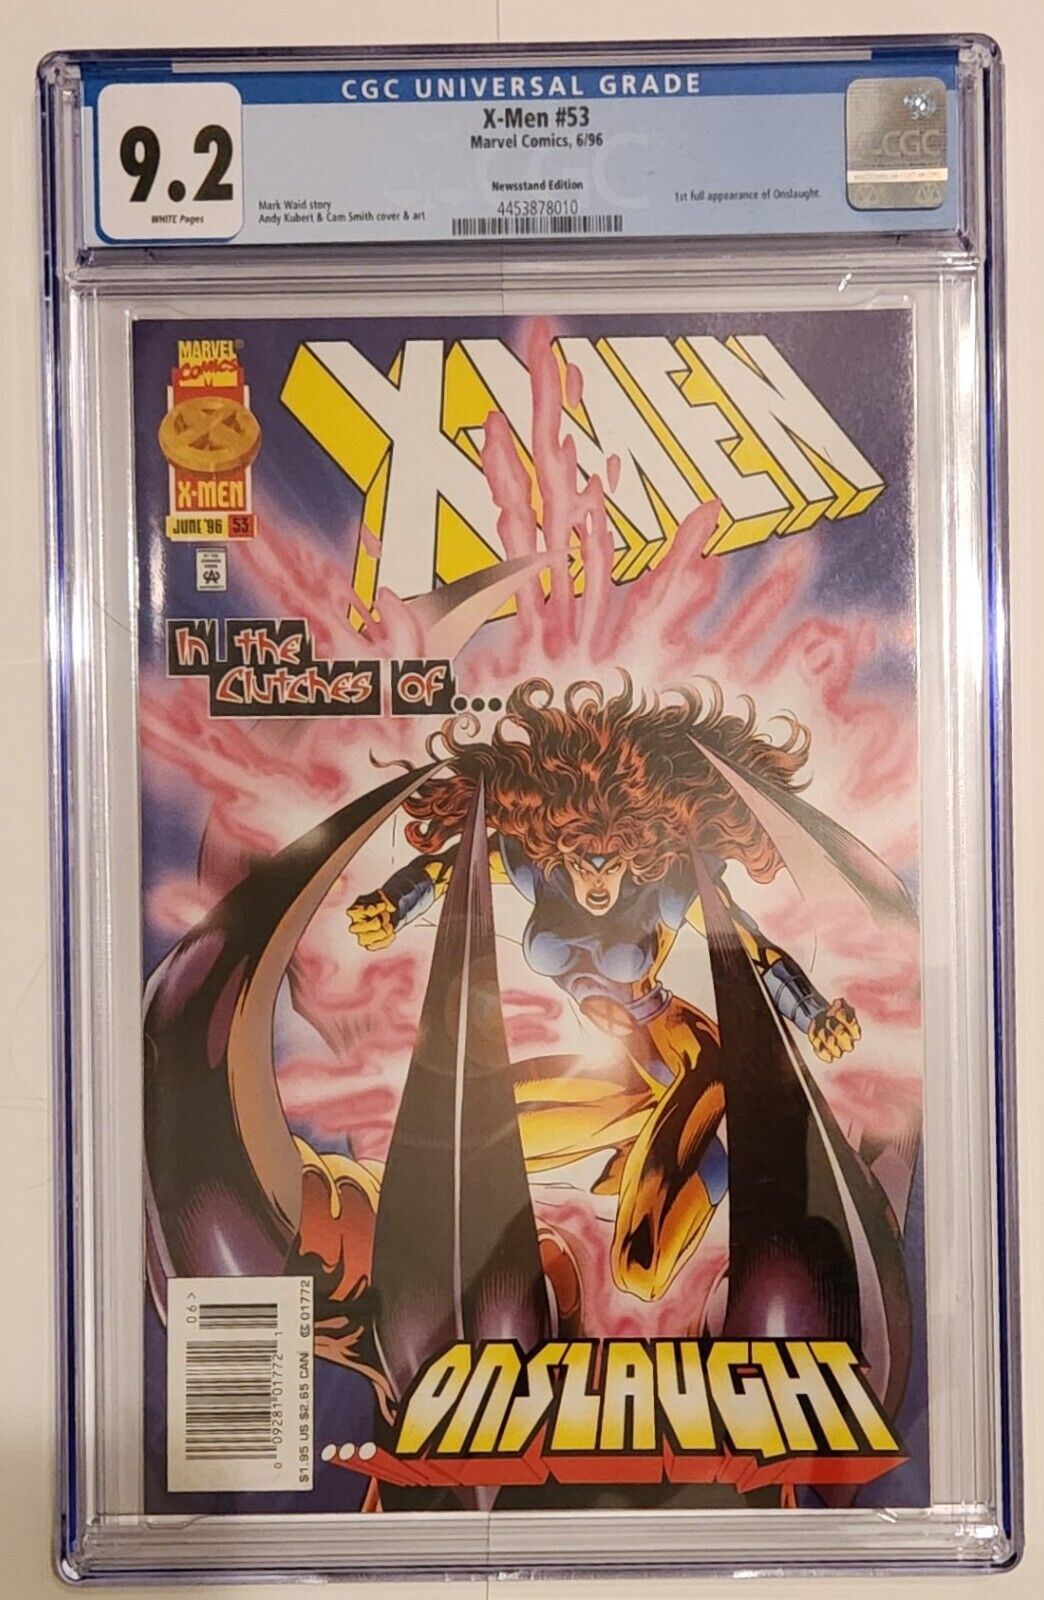 X-MEN # 53 MARVEL COMICS 6/96 CGC UNIVERSAL GRADE 9